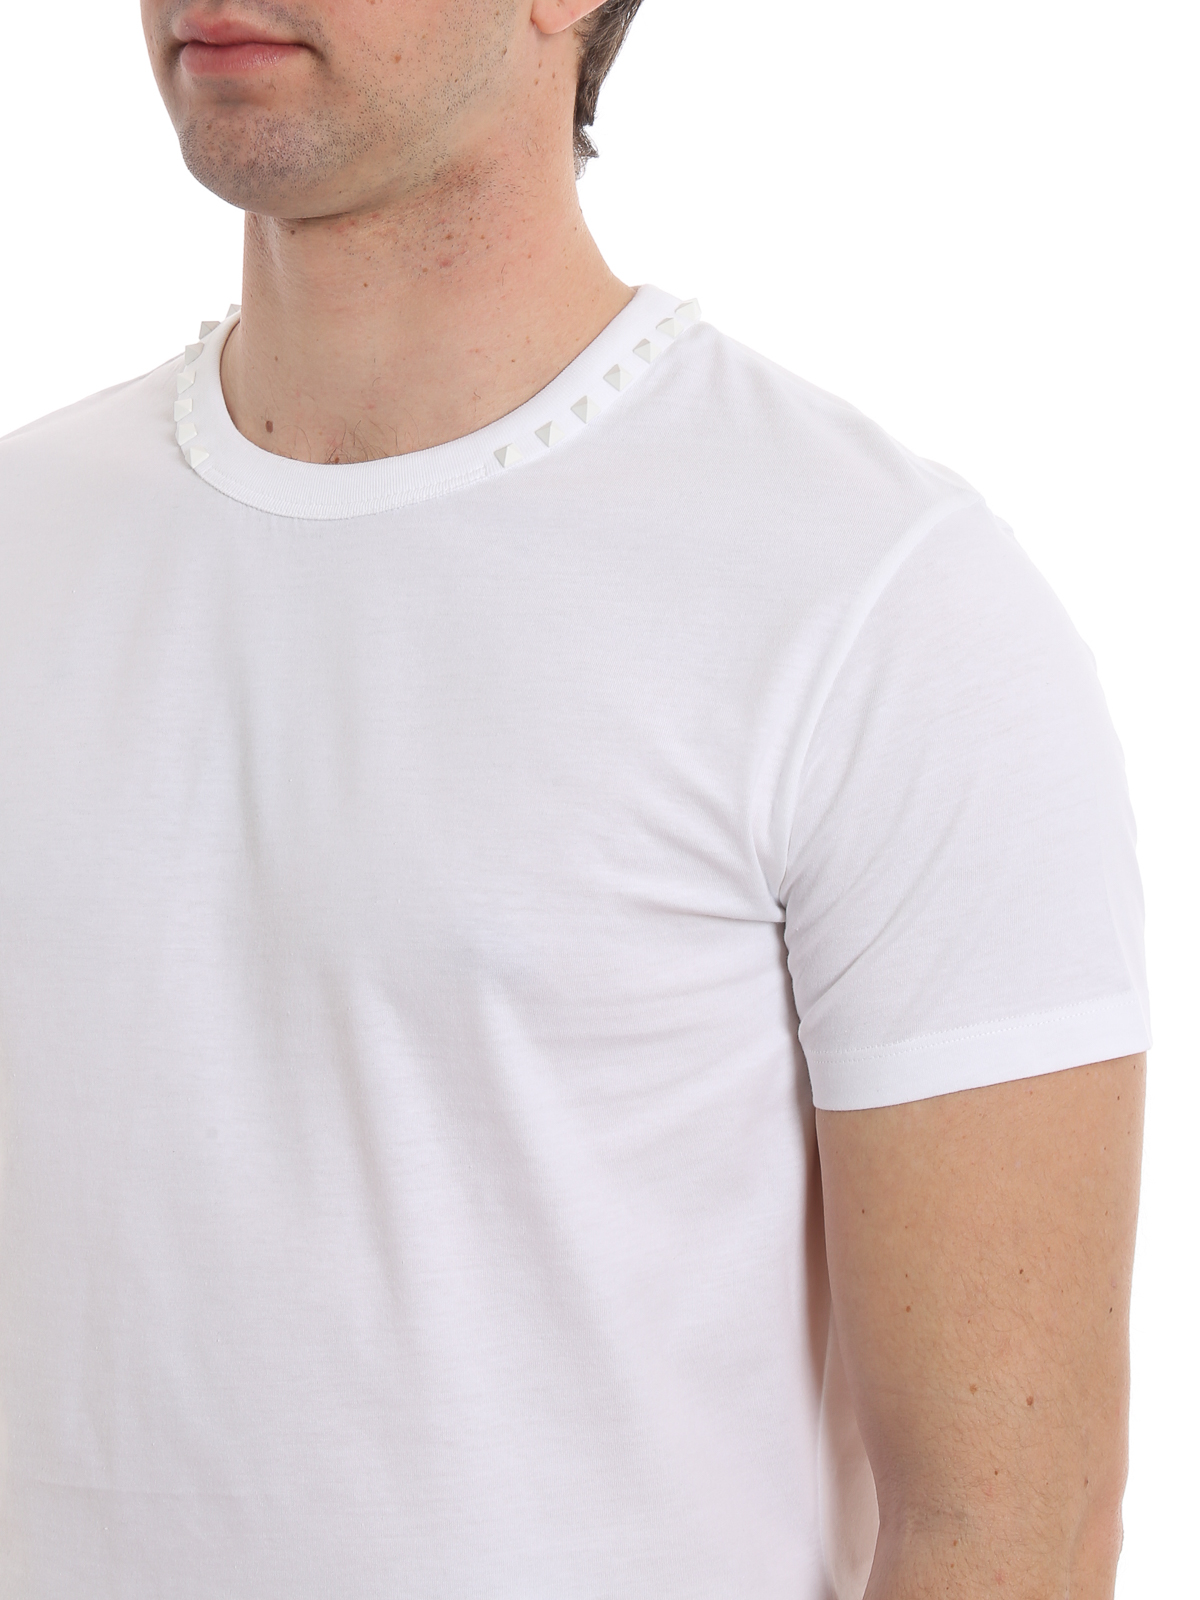 Valentino White T Shirt Online, 51% OFF | www.hcb.cat